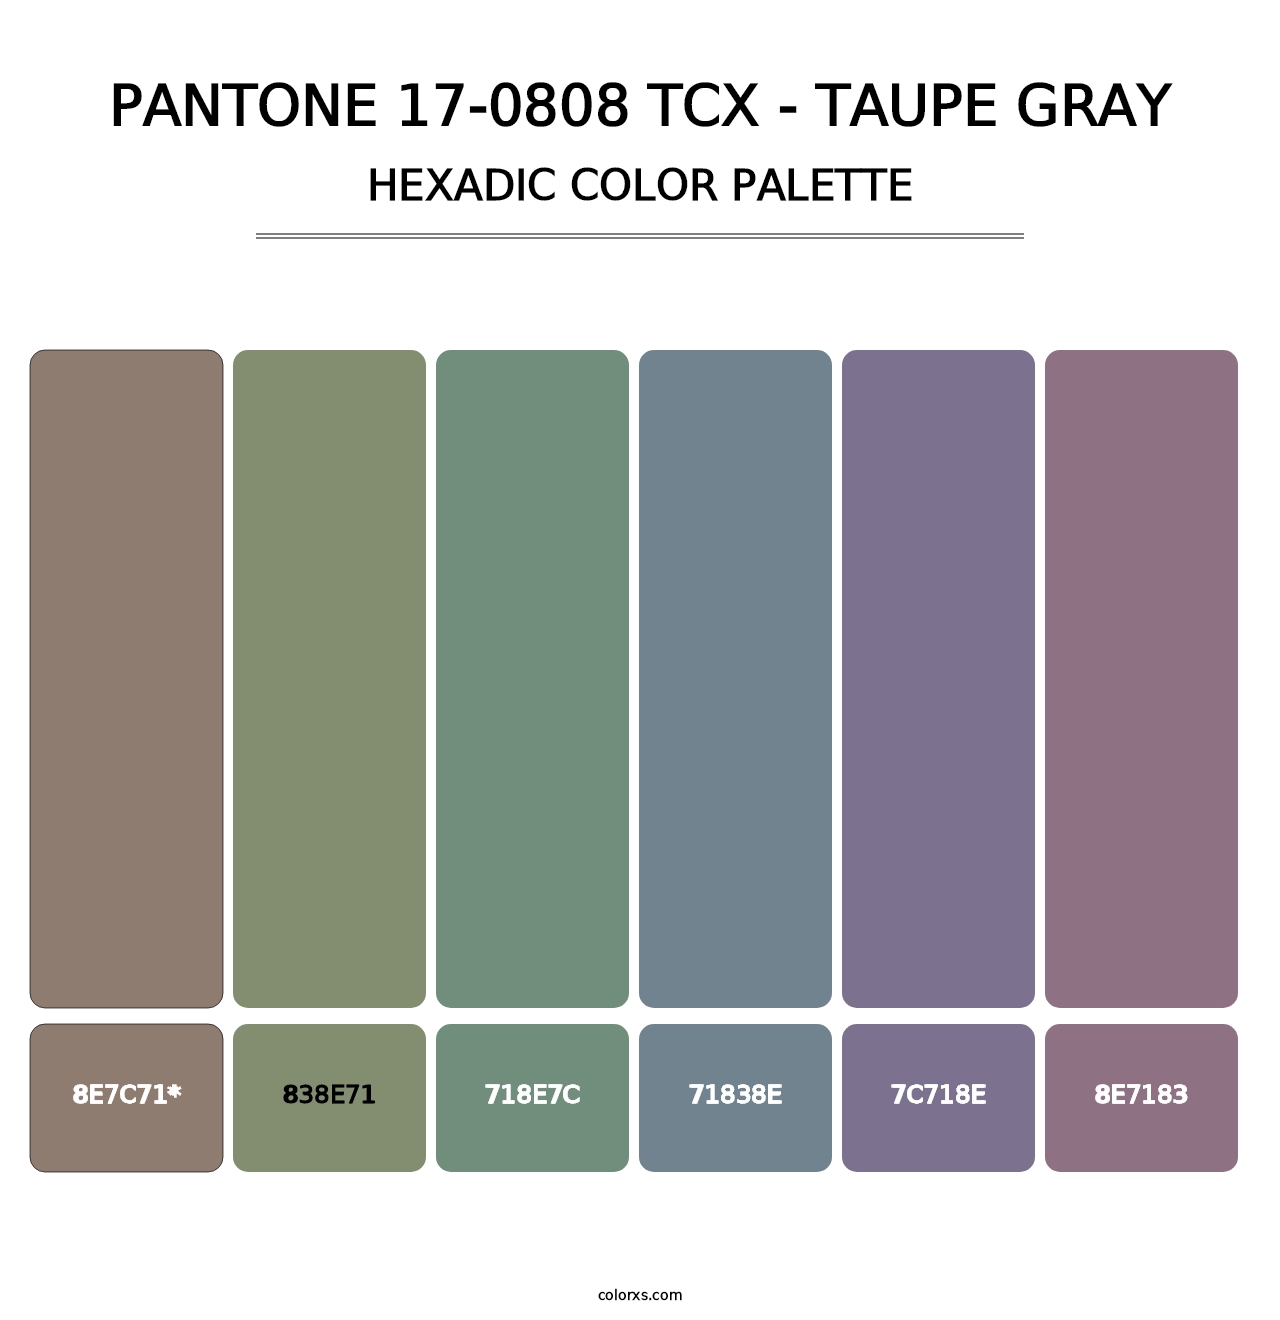 PANTONE 17-0808 TCX - Taupe Gray - Hexadic Color Palette